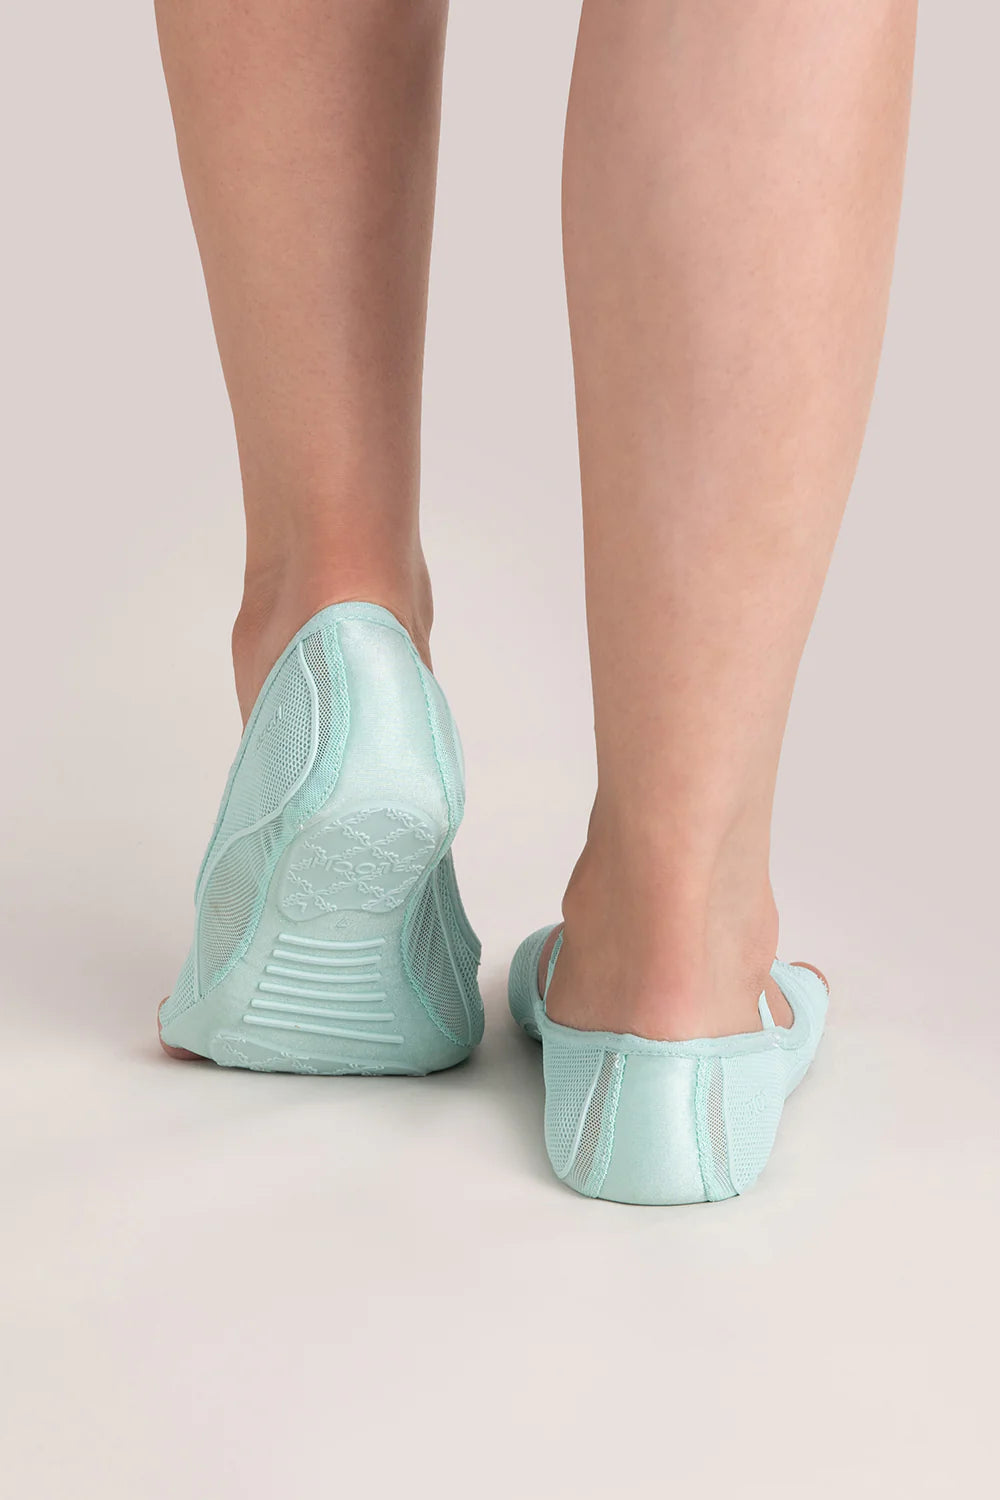 Barre Shoes - Stance (S2278) Shoe